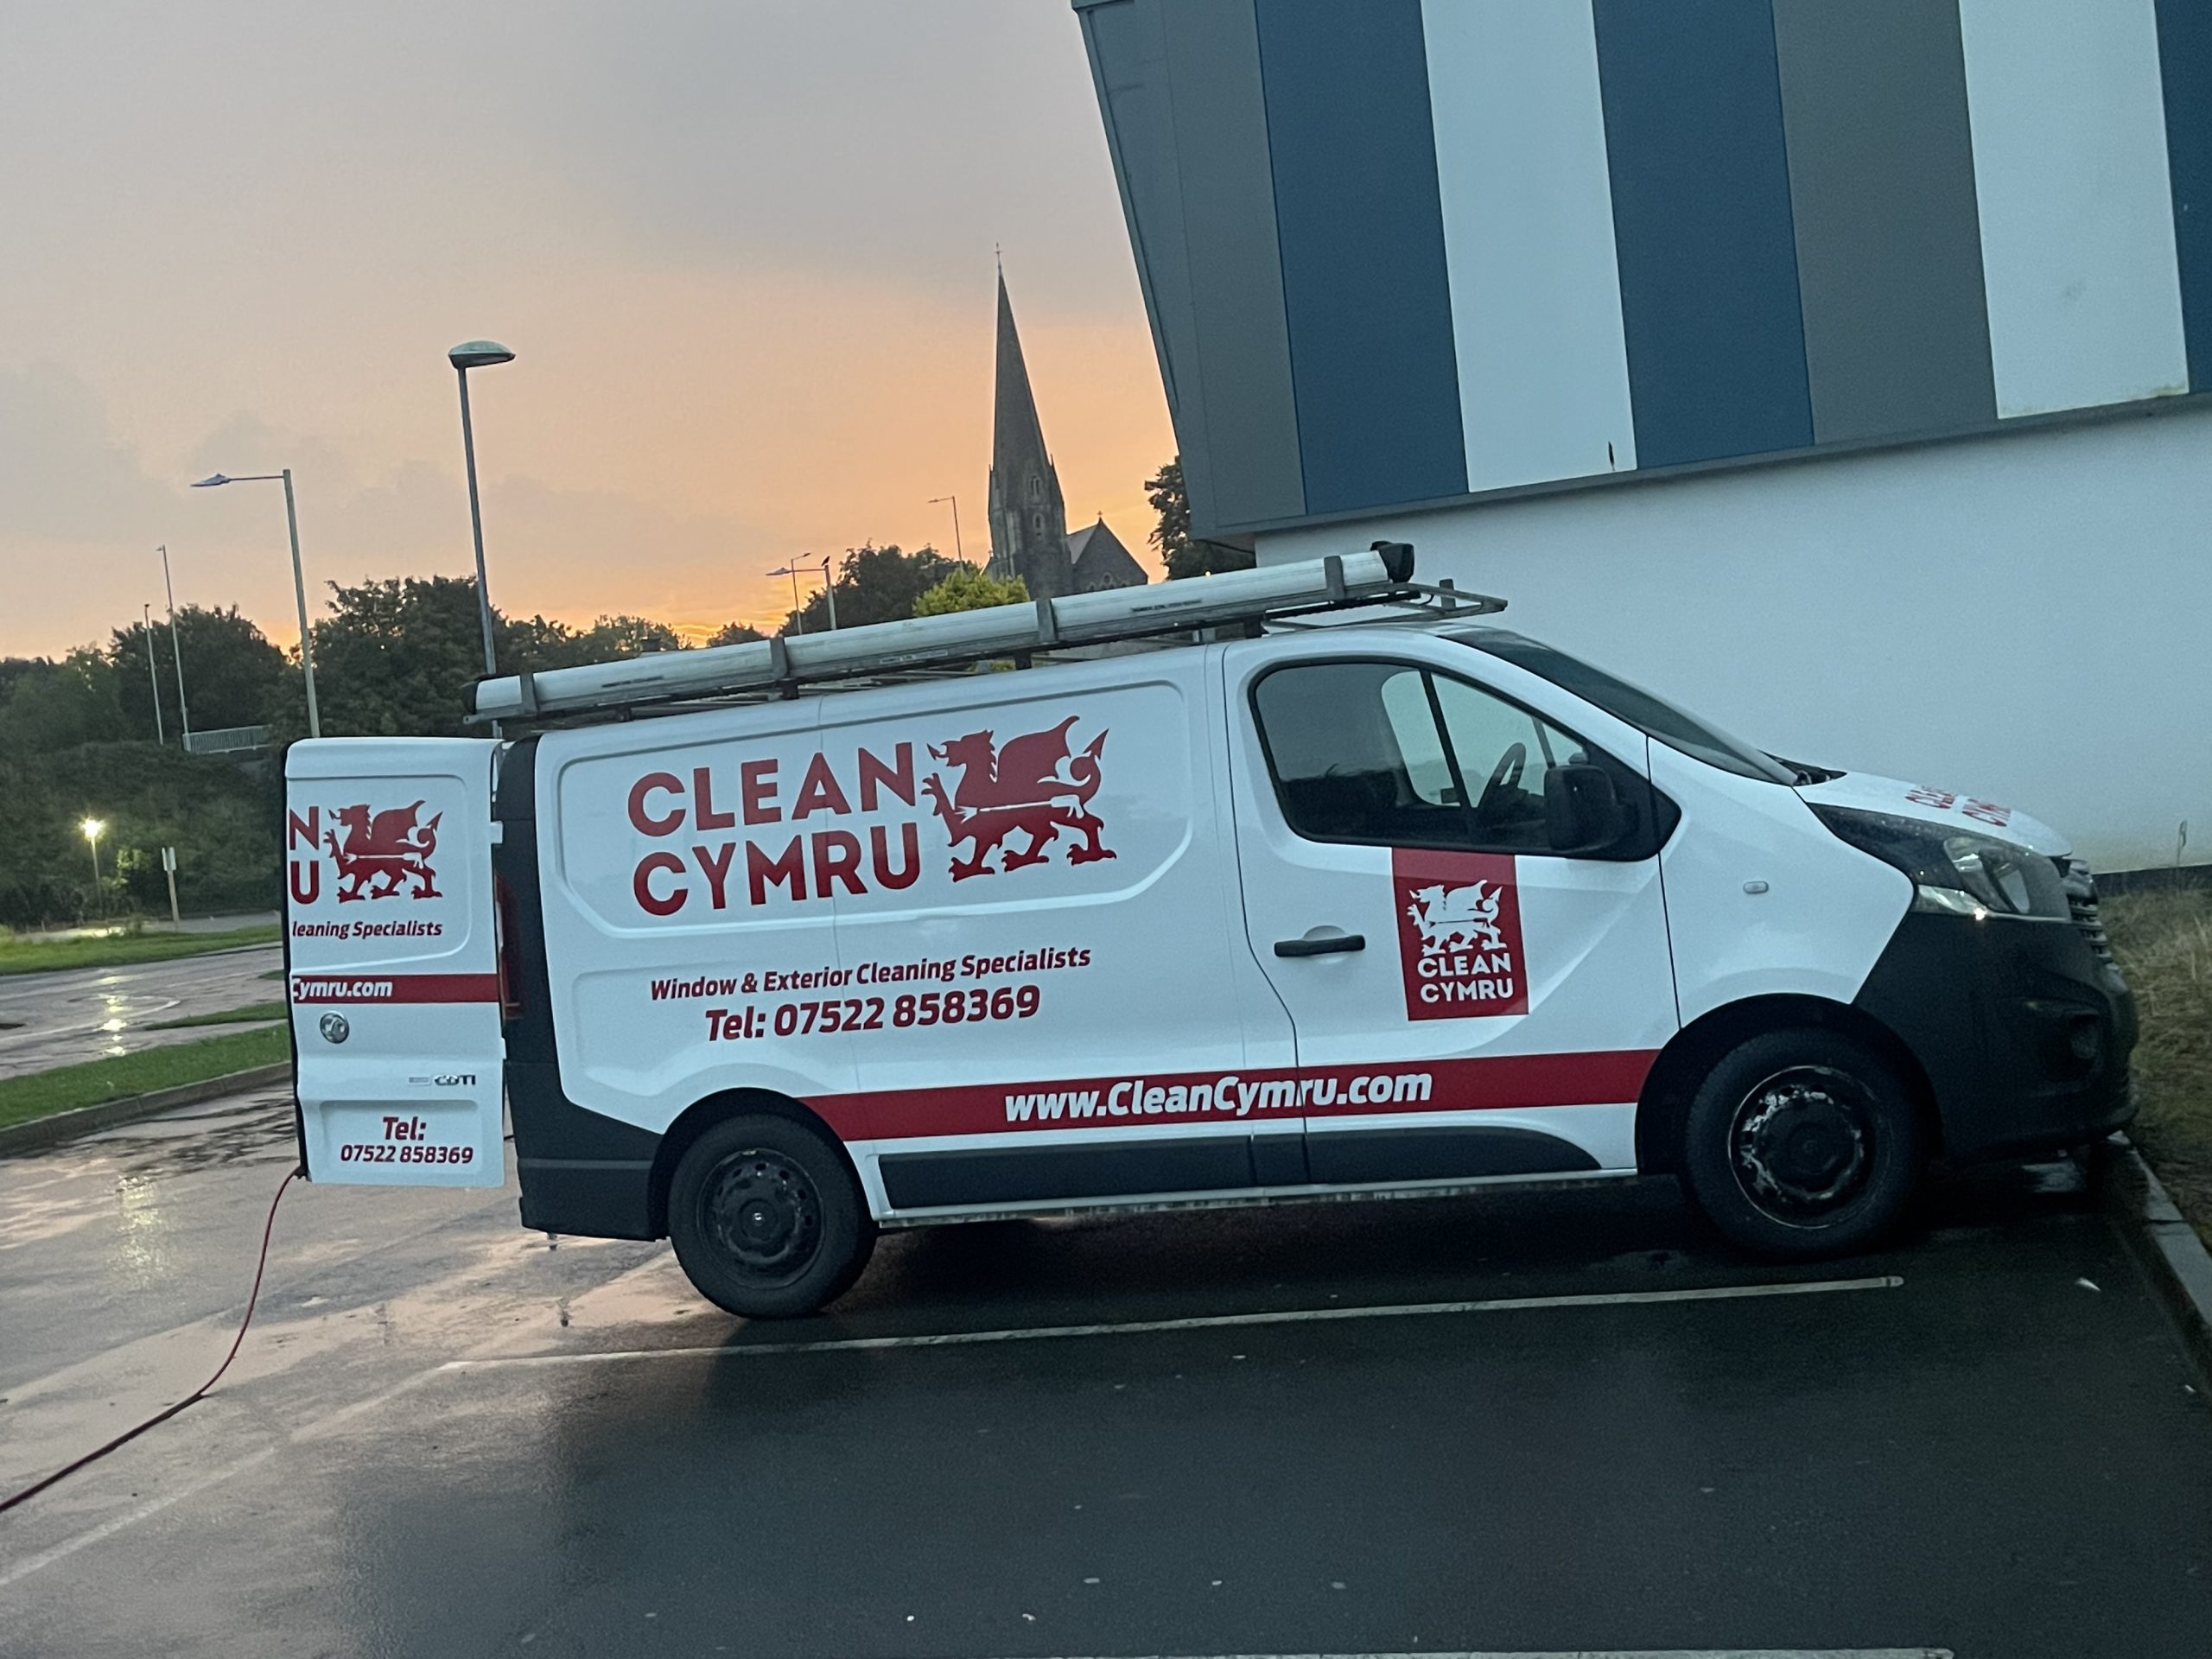 Professional Window Cleaning in Bridgend. Clean Cymru Van outside The Bridgend Life Centre during some commercial windoe cleaning.